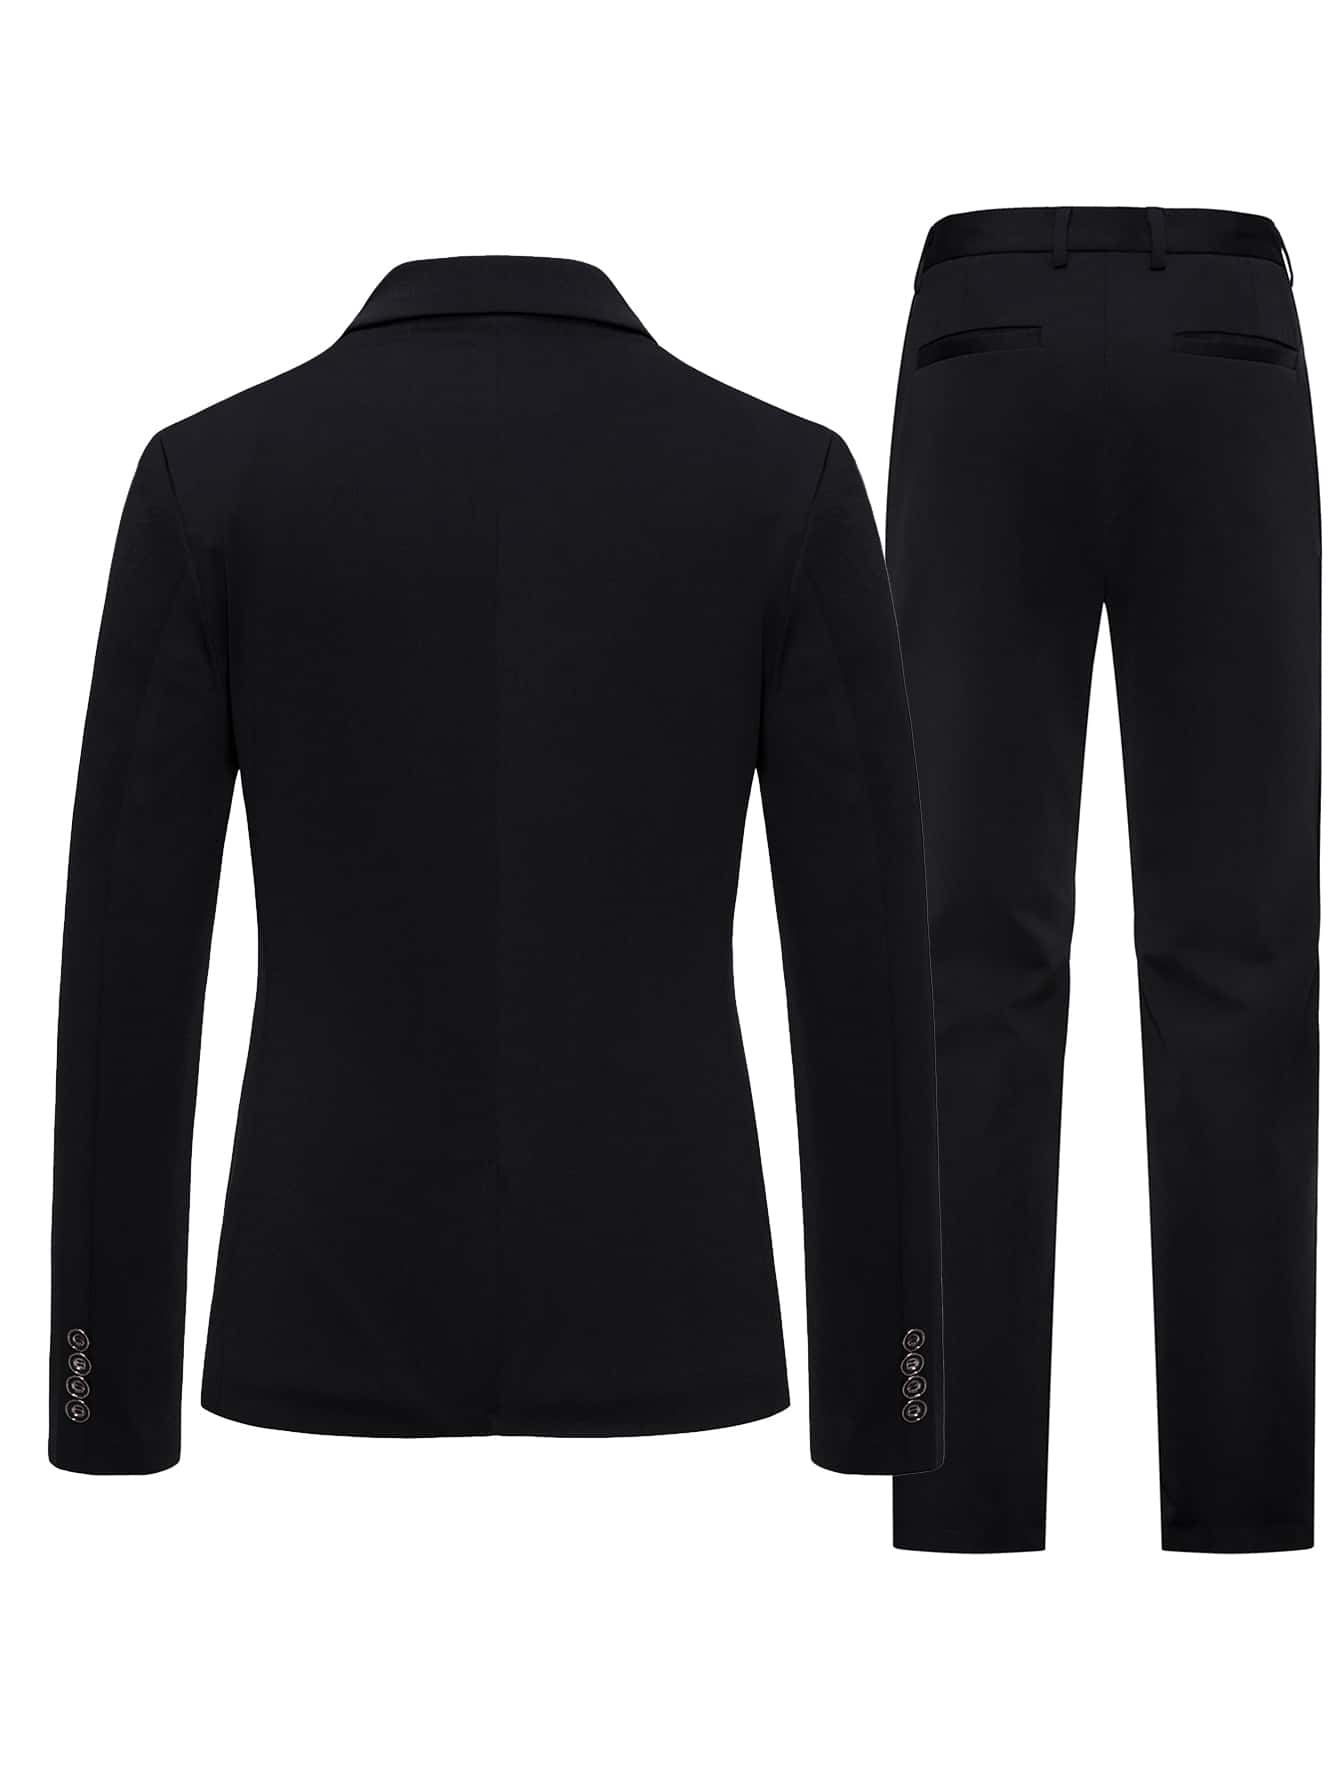 Manfinity Mode Men Single Button Blazer & Suit Pants